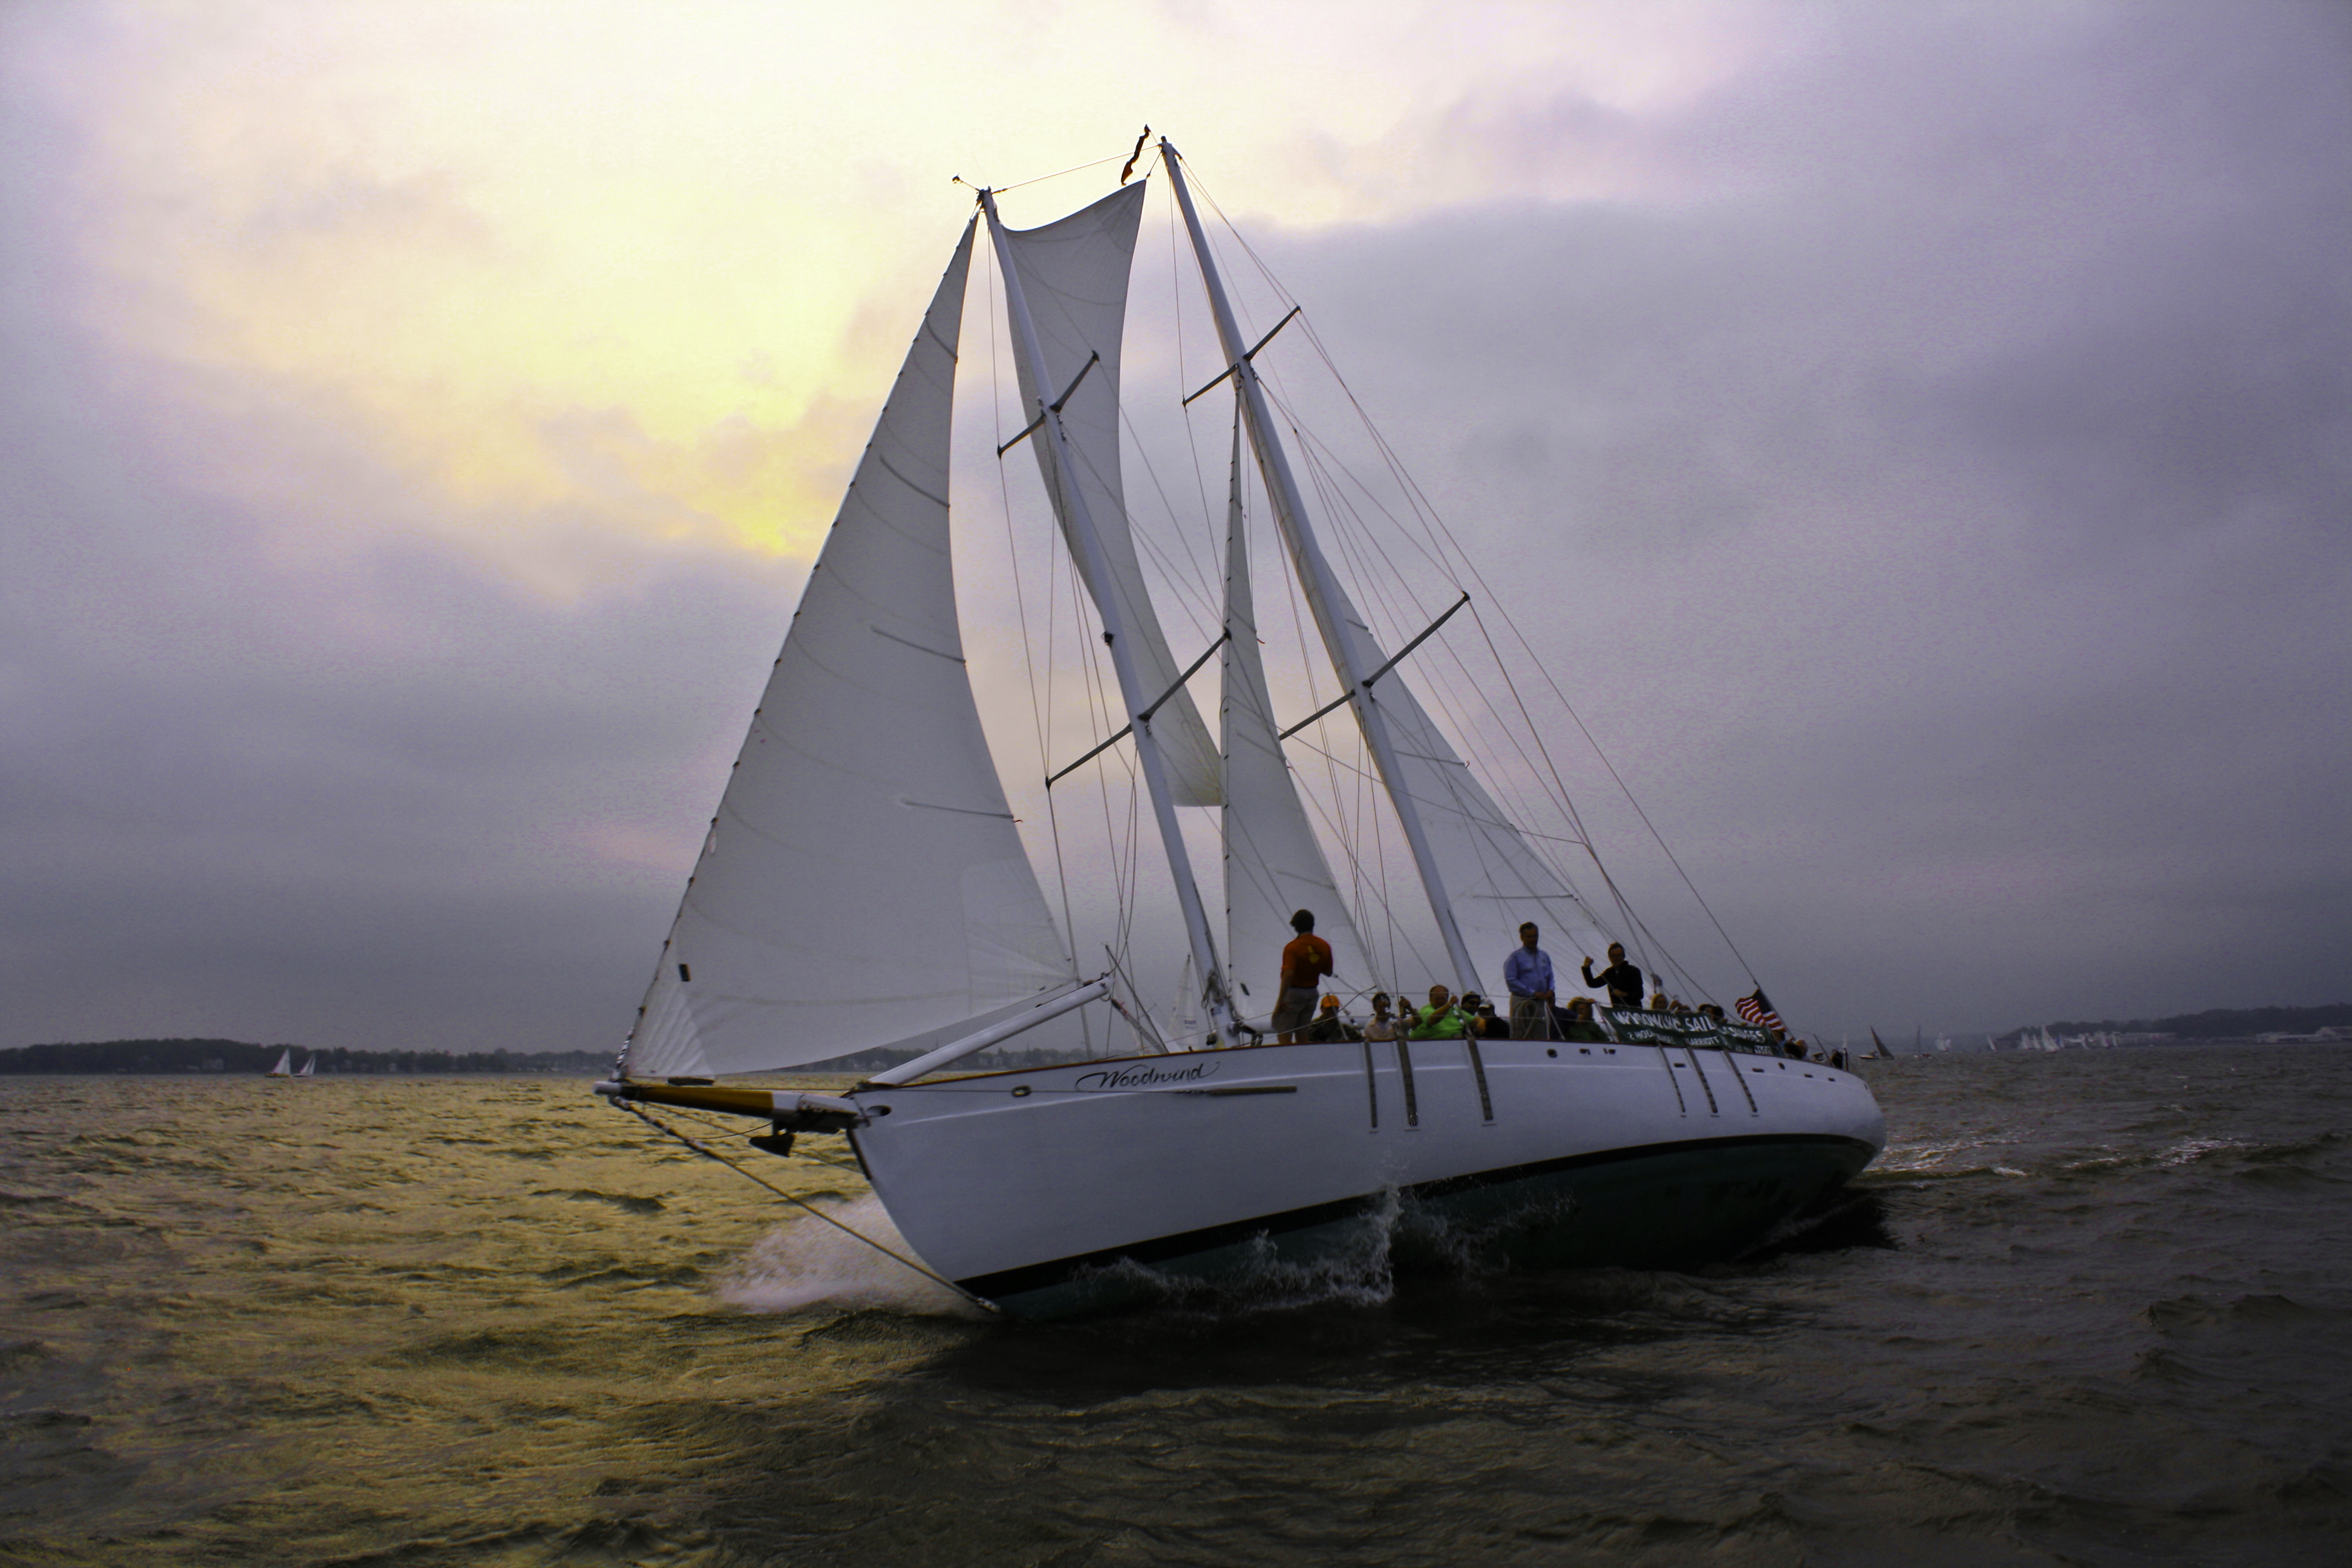 Schooner racing across the Chesapeake on a storm cloud day